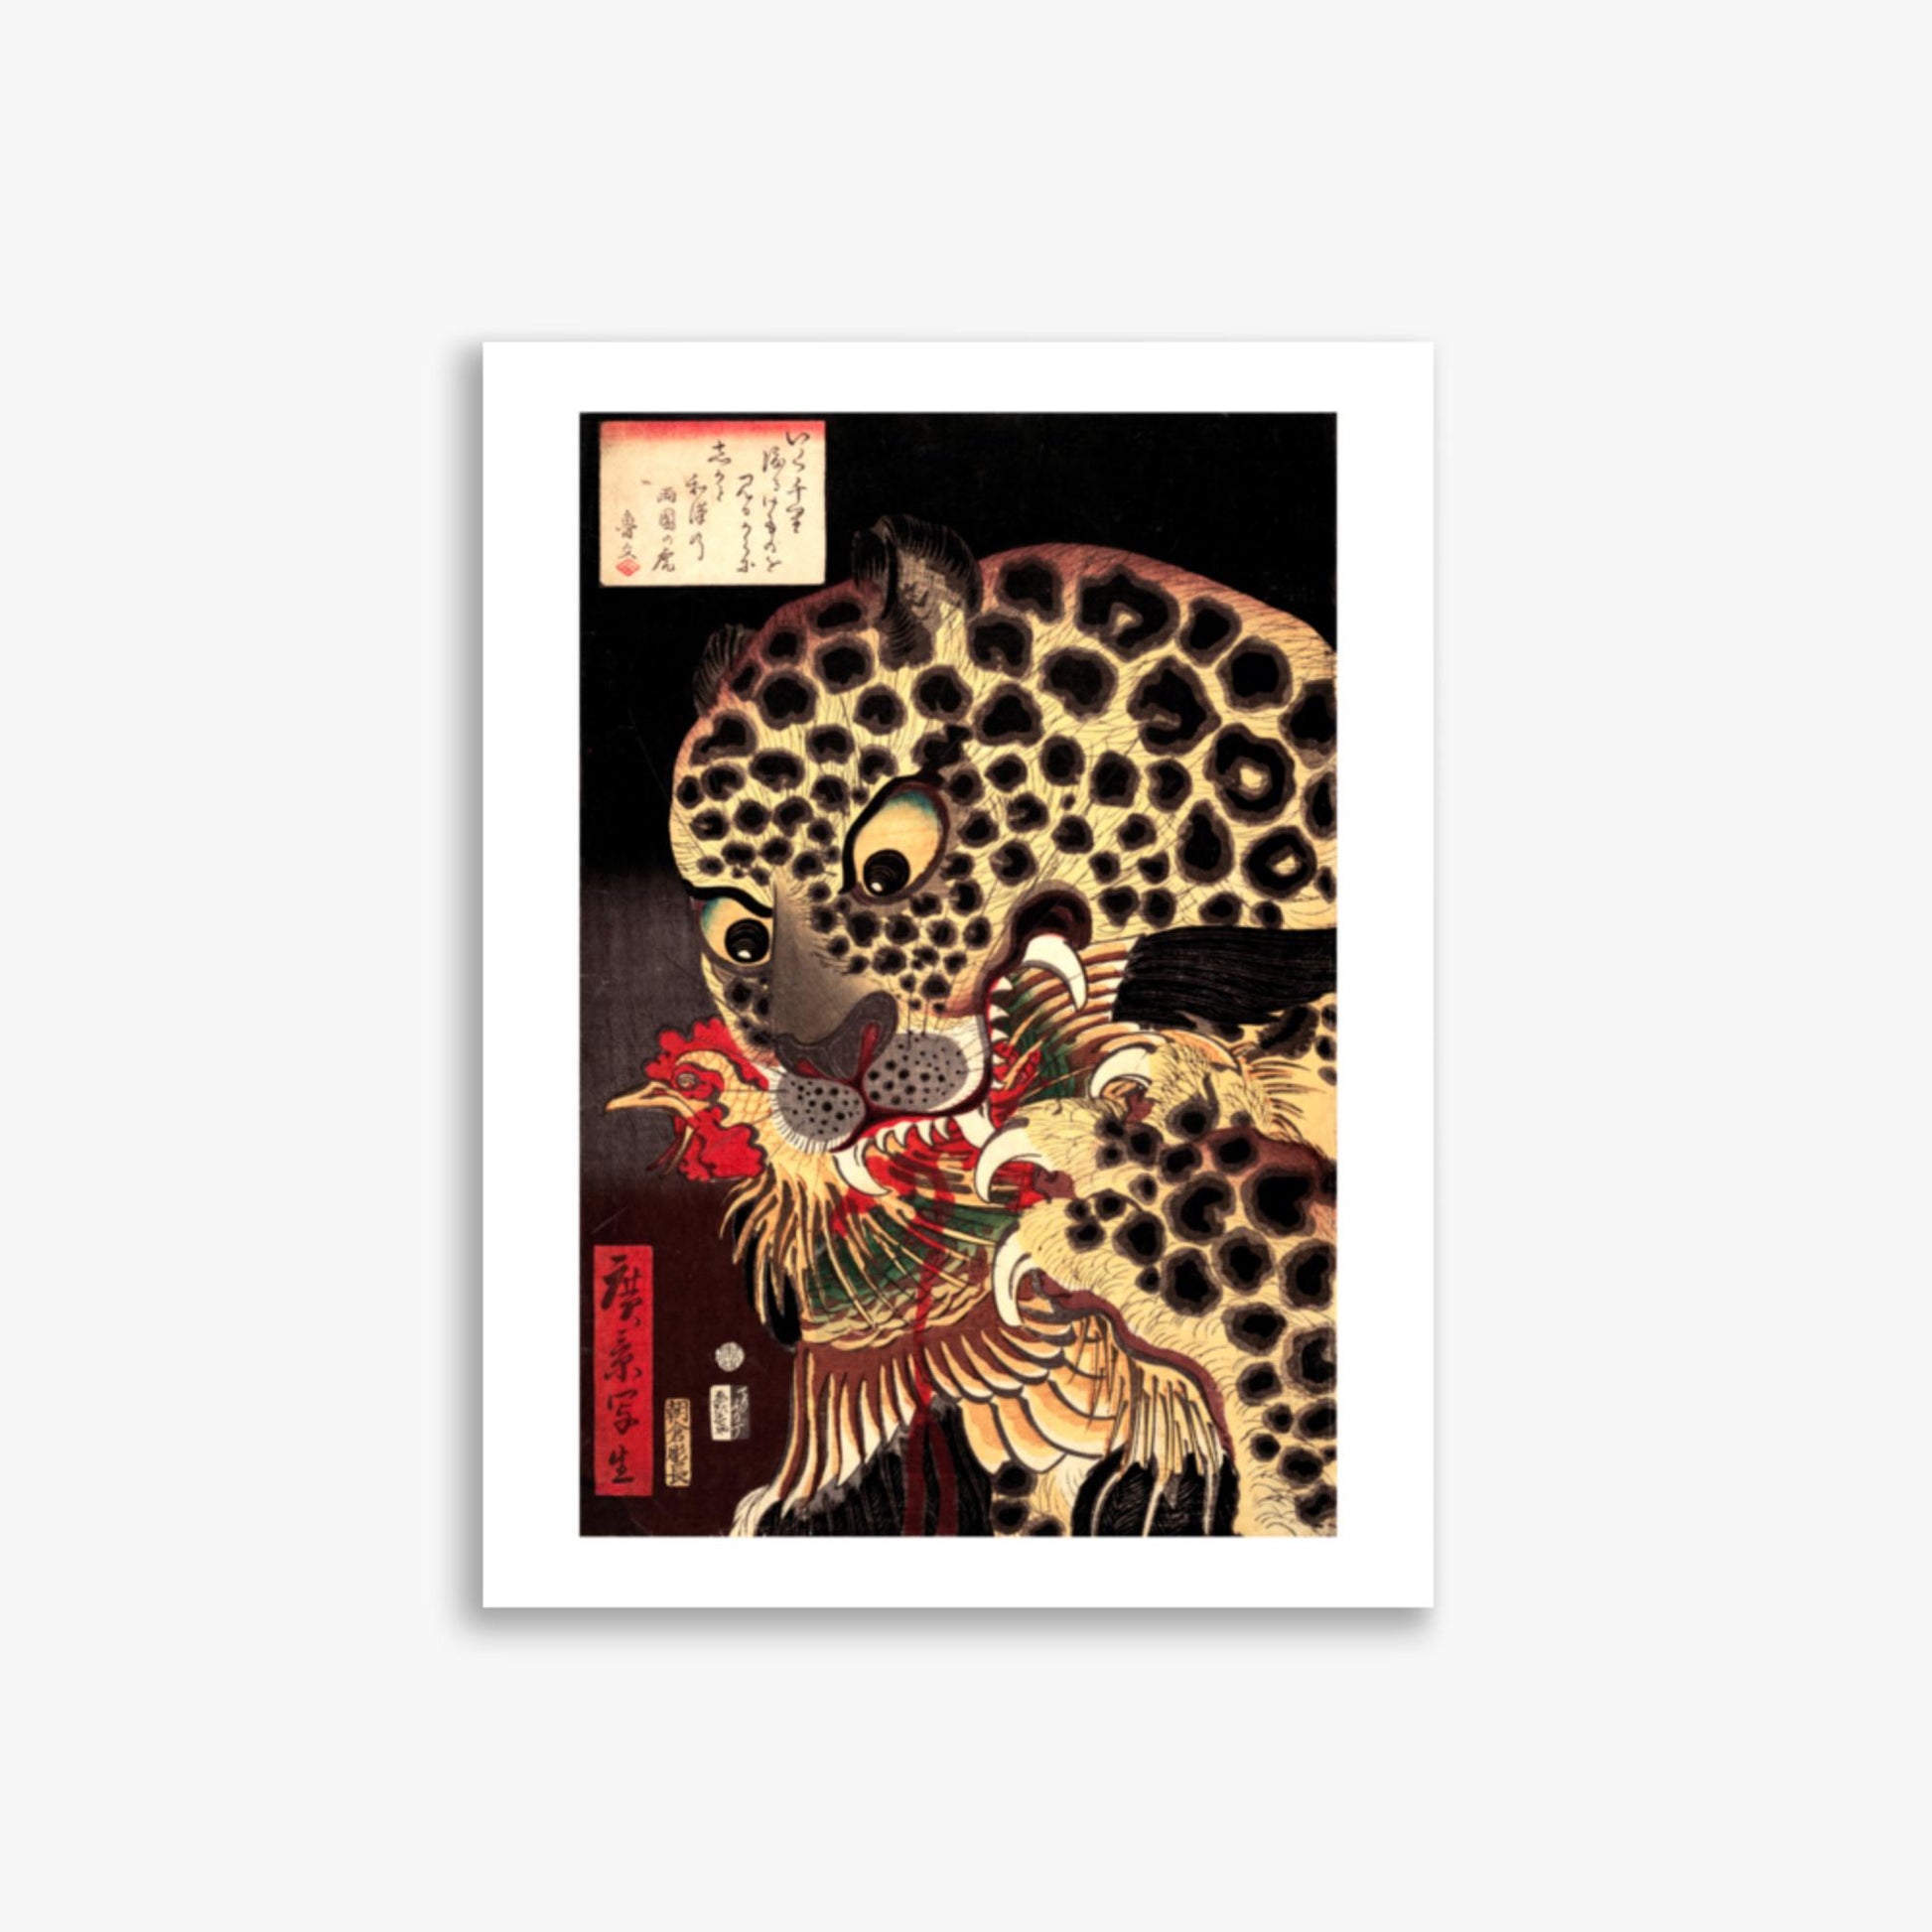 Utagawa Hirokage - The Tiger of Ryōkoku 30x40 cm Poster